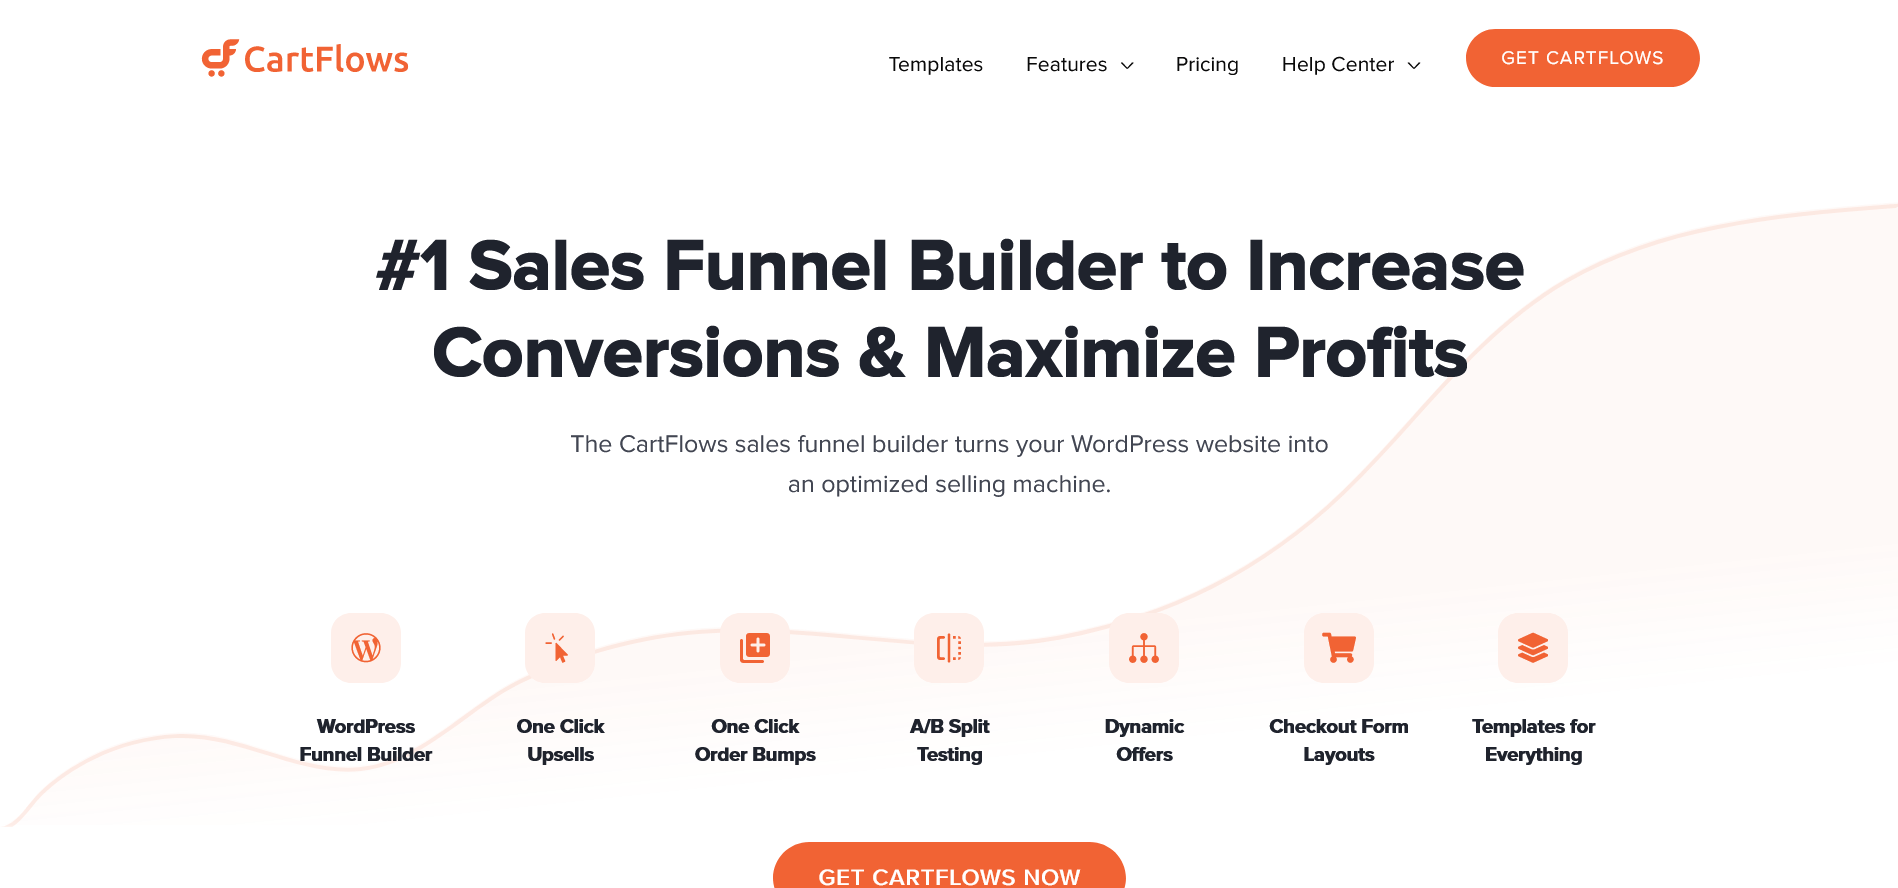 CartFlows - #1 Sales Funnel Builder for WordPress WooCommerce